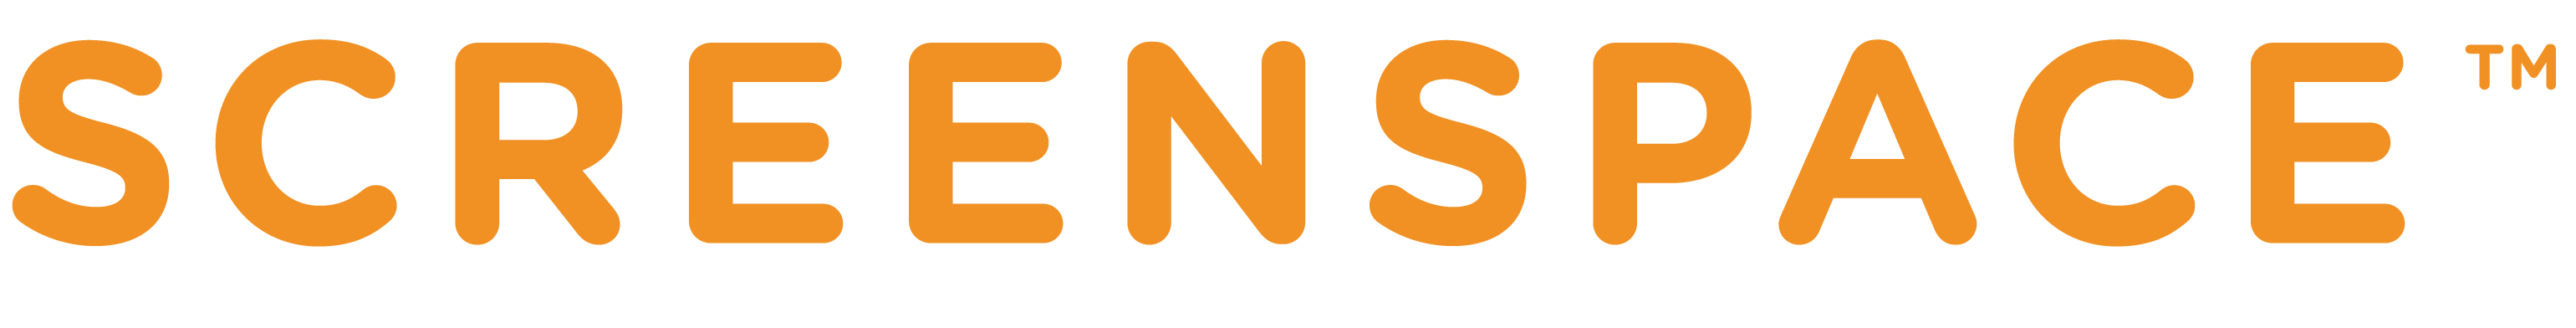 Screenspace logo